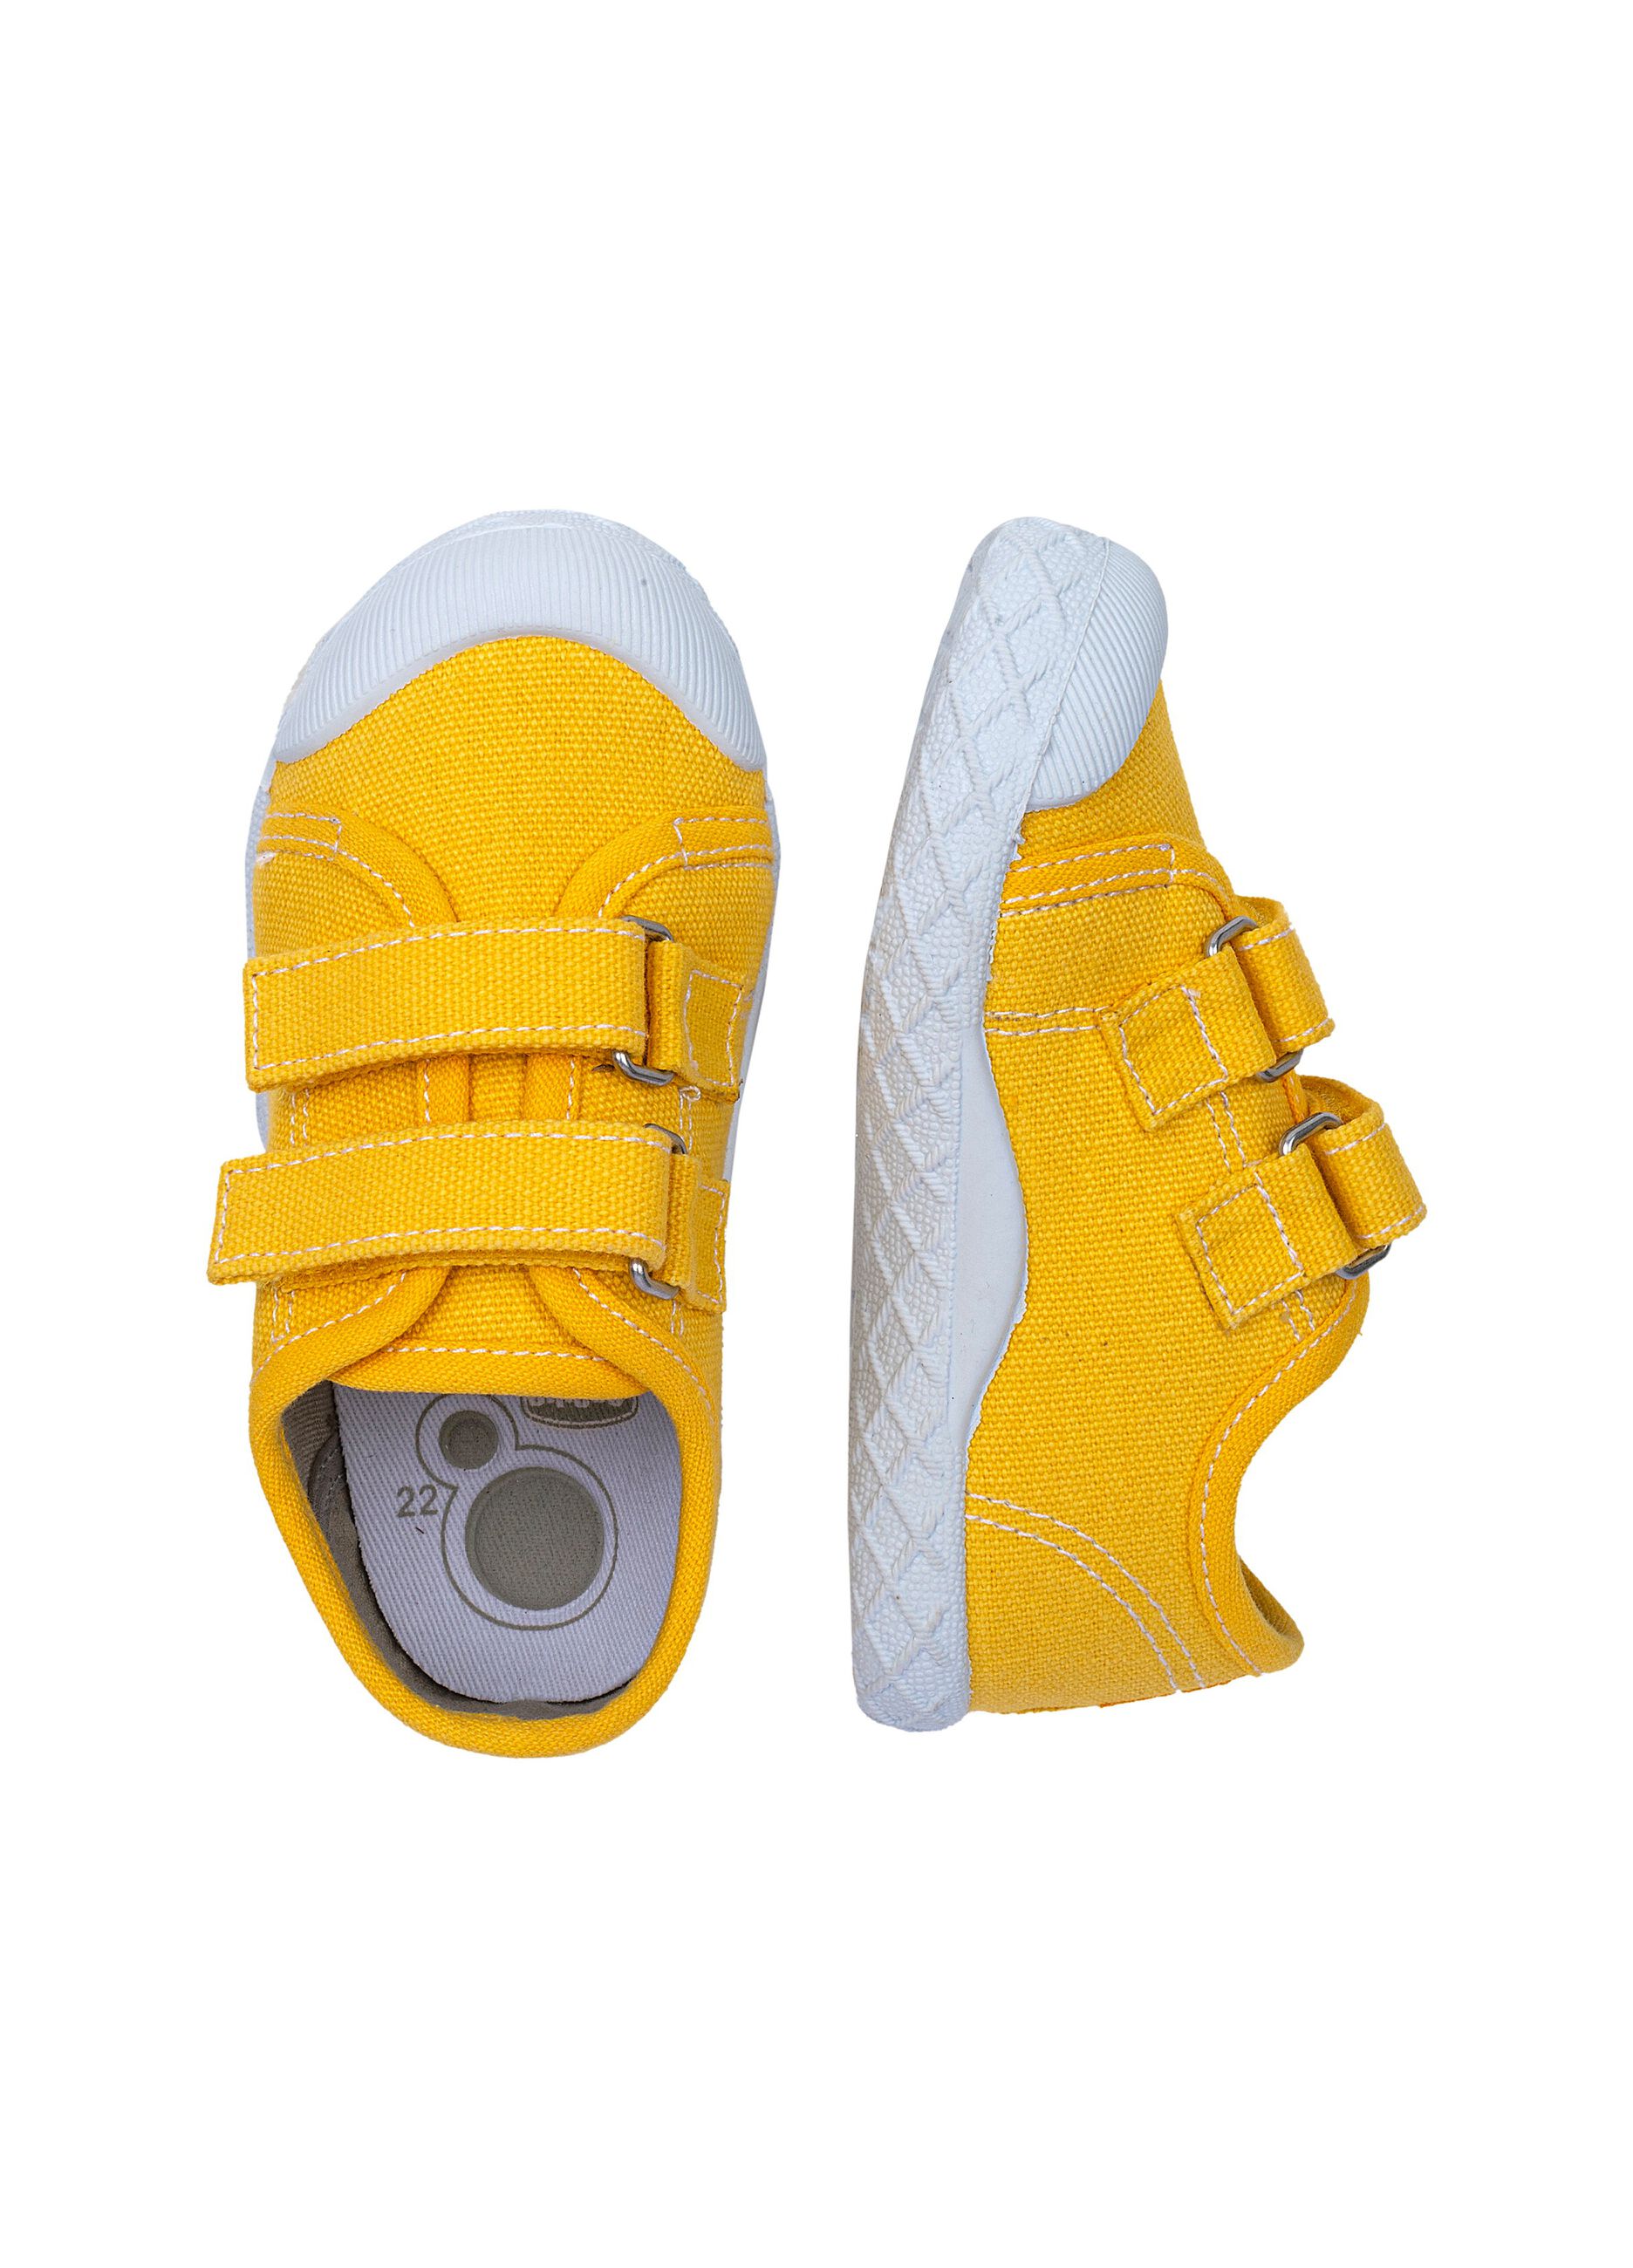 Cambridge sneakers with double Velcro strap